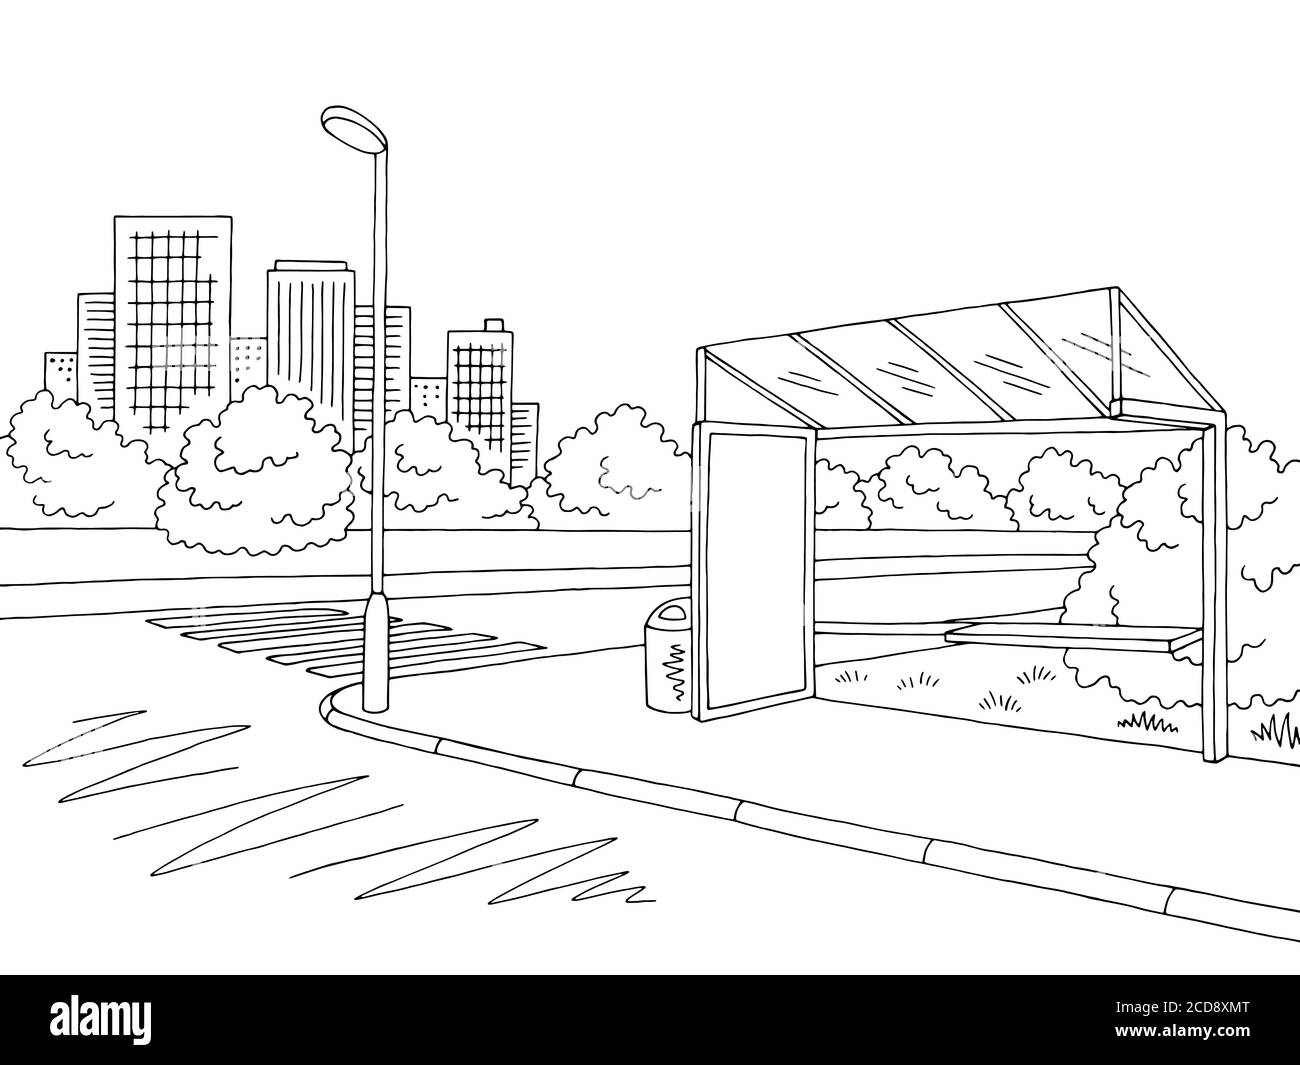 Bushaltestelle Grafik schwarz weiß Stadt Straße Landschaft Skizze Illustration vektor Stock Vektor